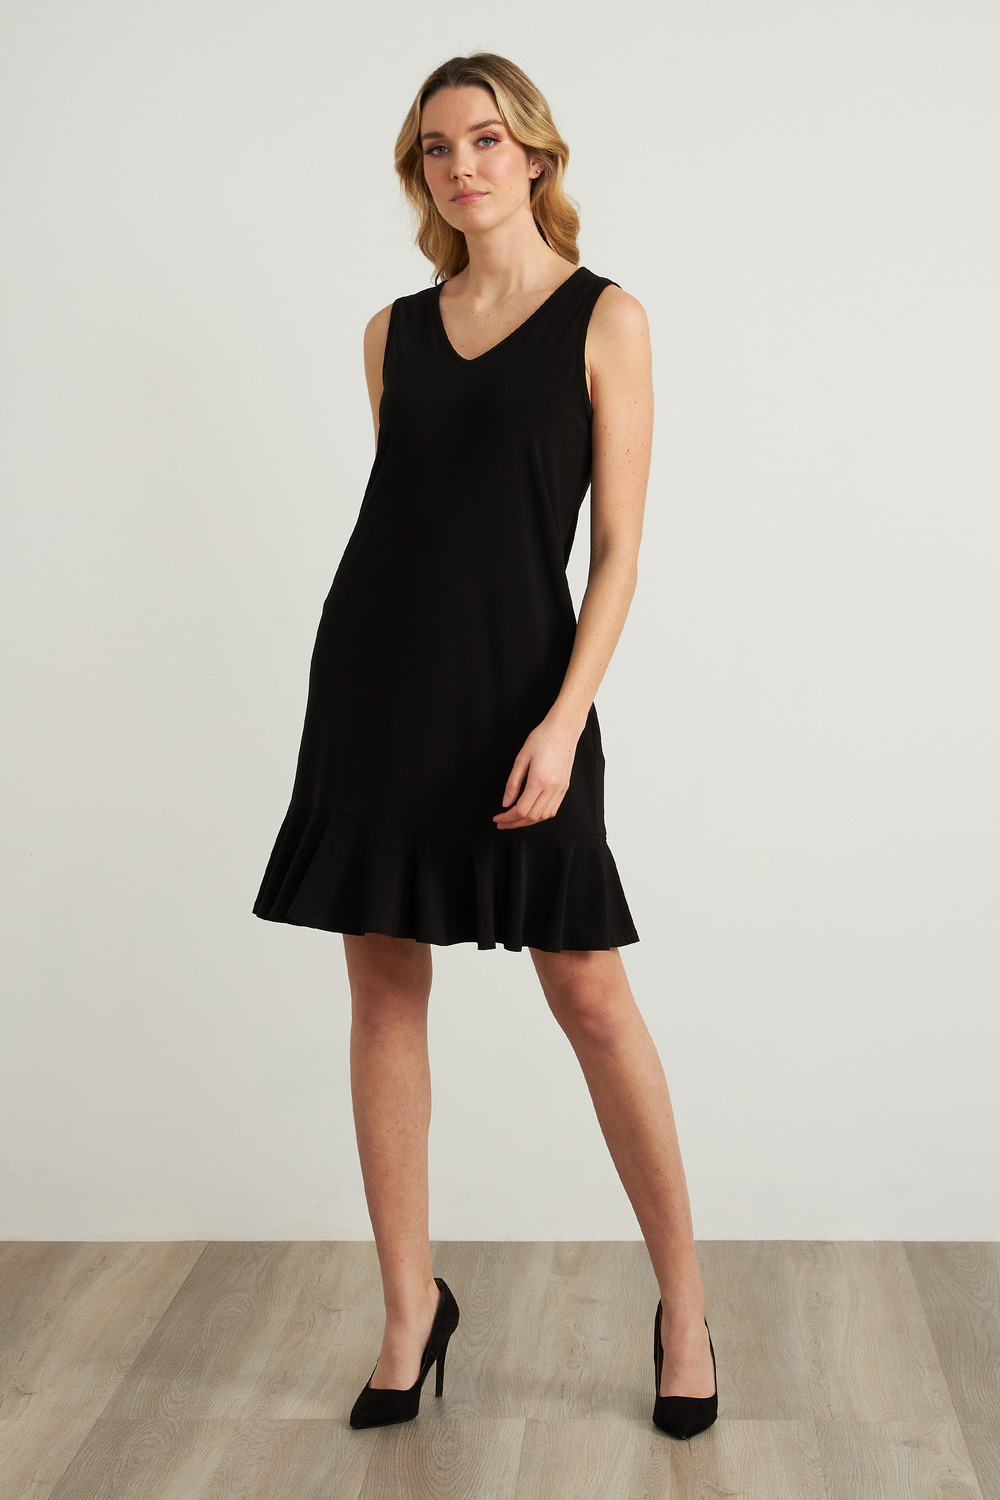 Joseph Ribkoff Sleeveless Mini Dress Style 212204. Black